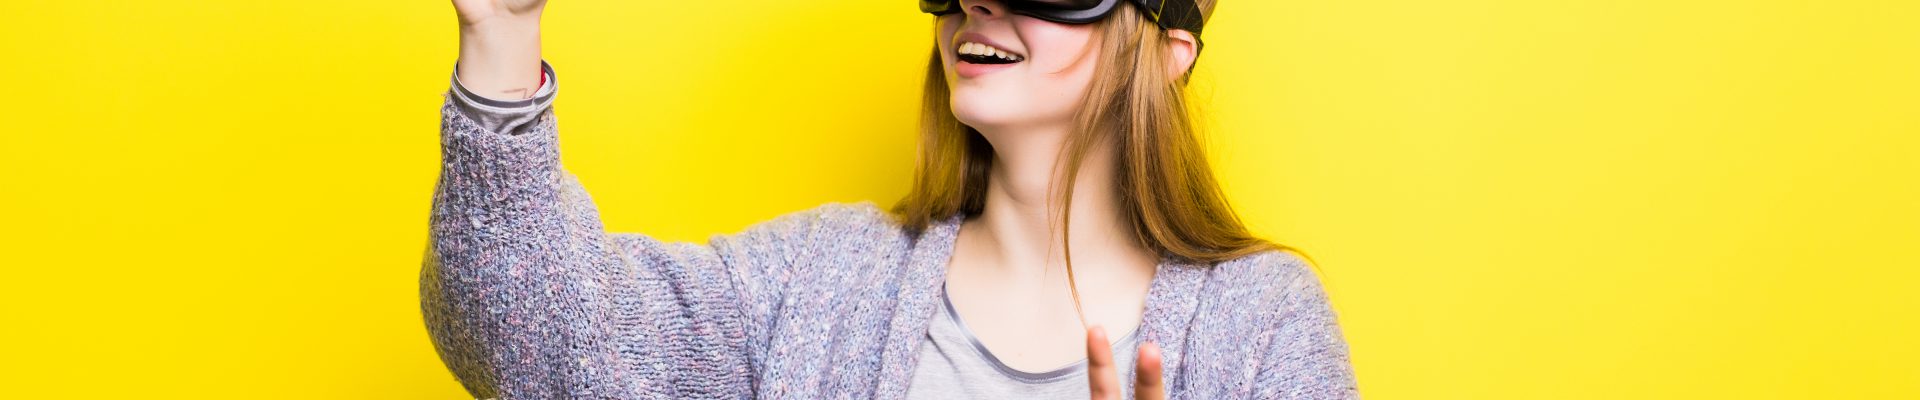 virtual reality summer school milano bicocca